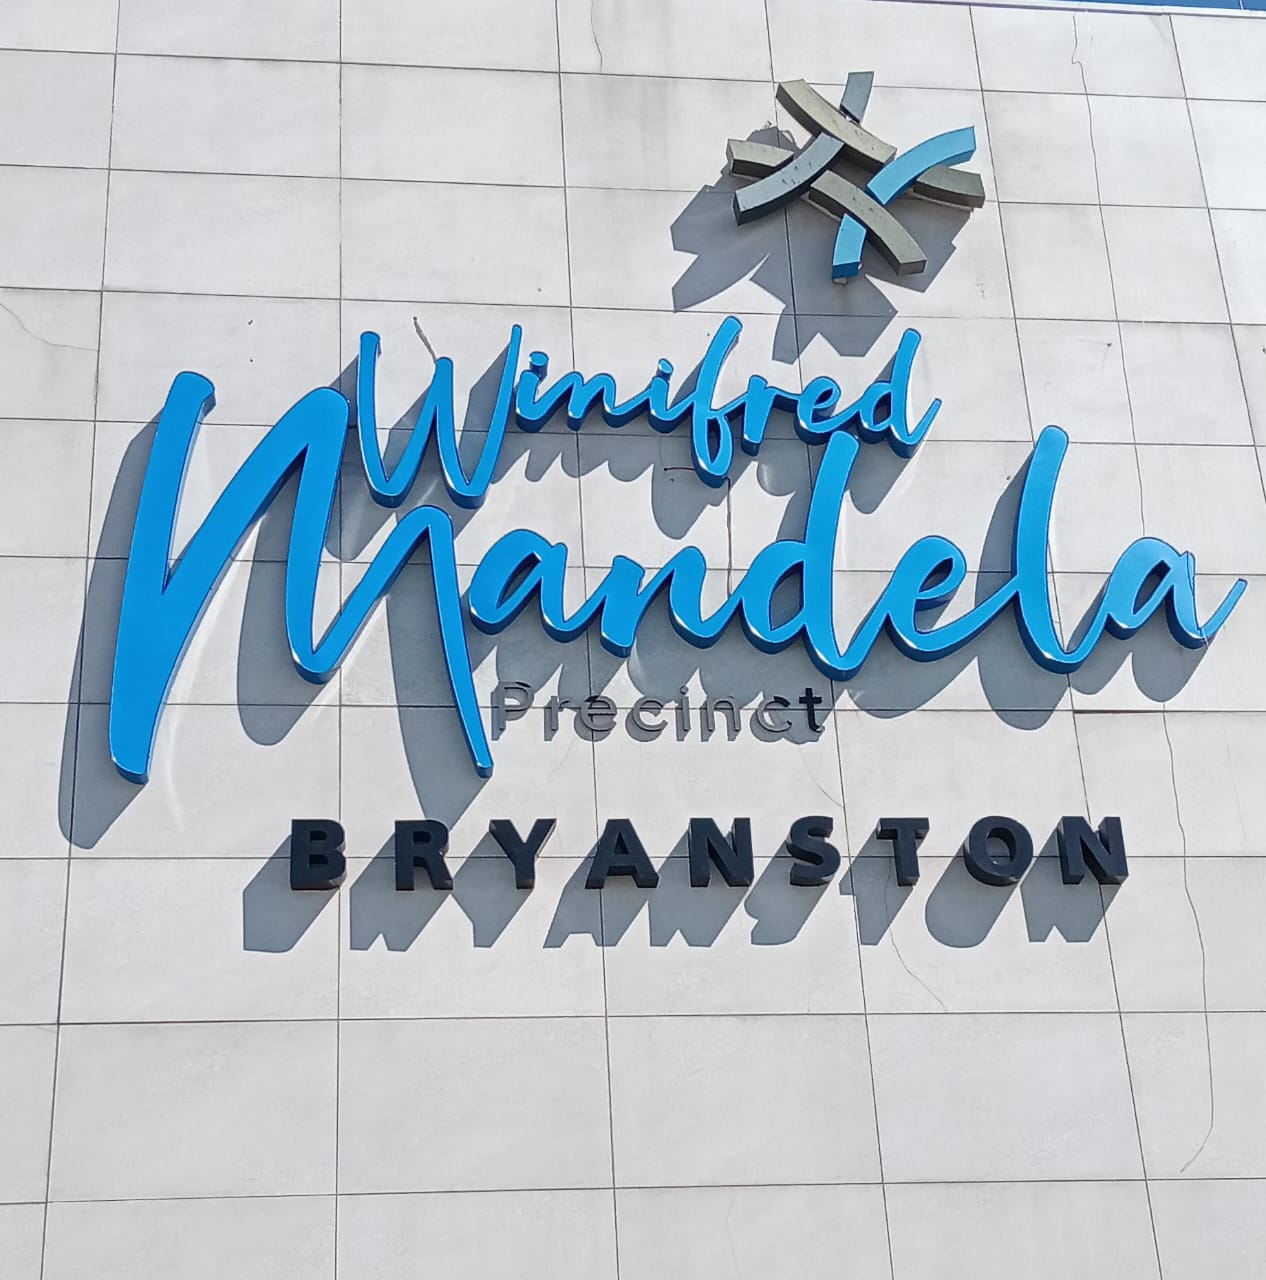 Transformation In Johannesburg: Nicolway Centre Becomes Winifred Mandela Precinct 10